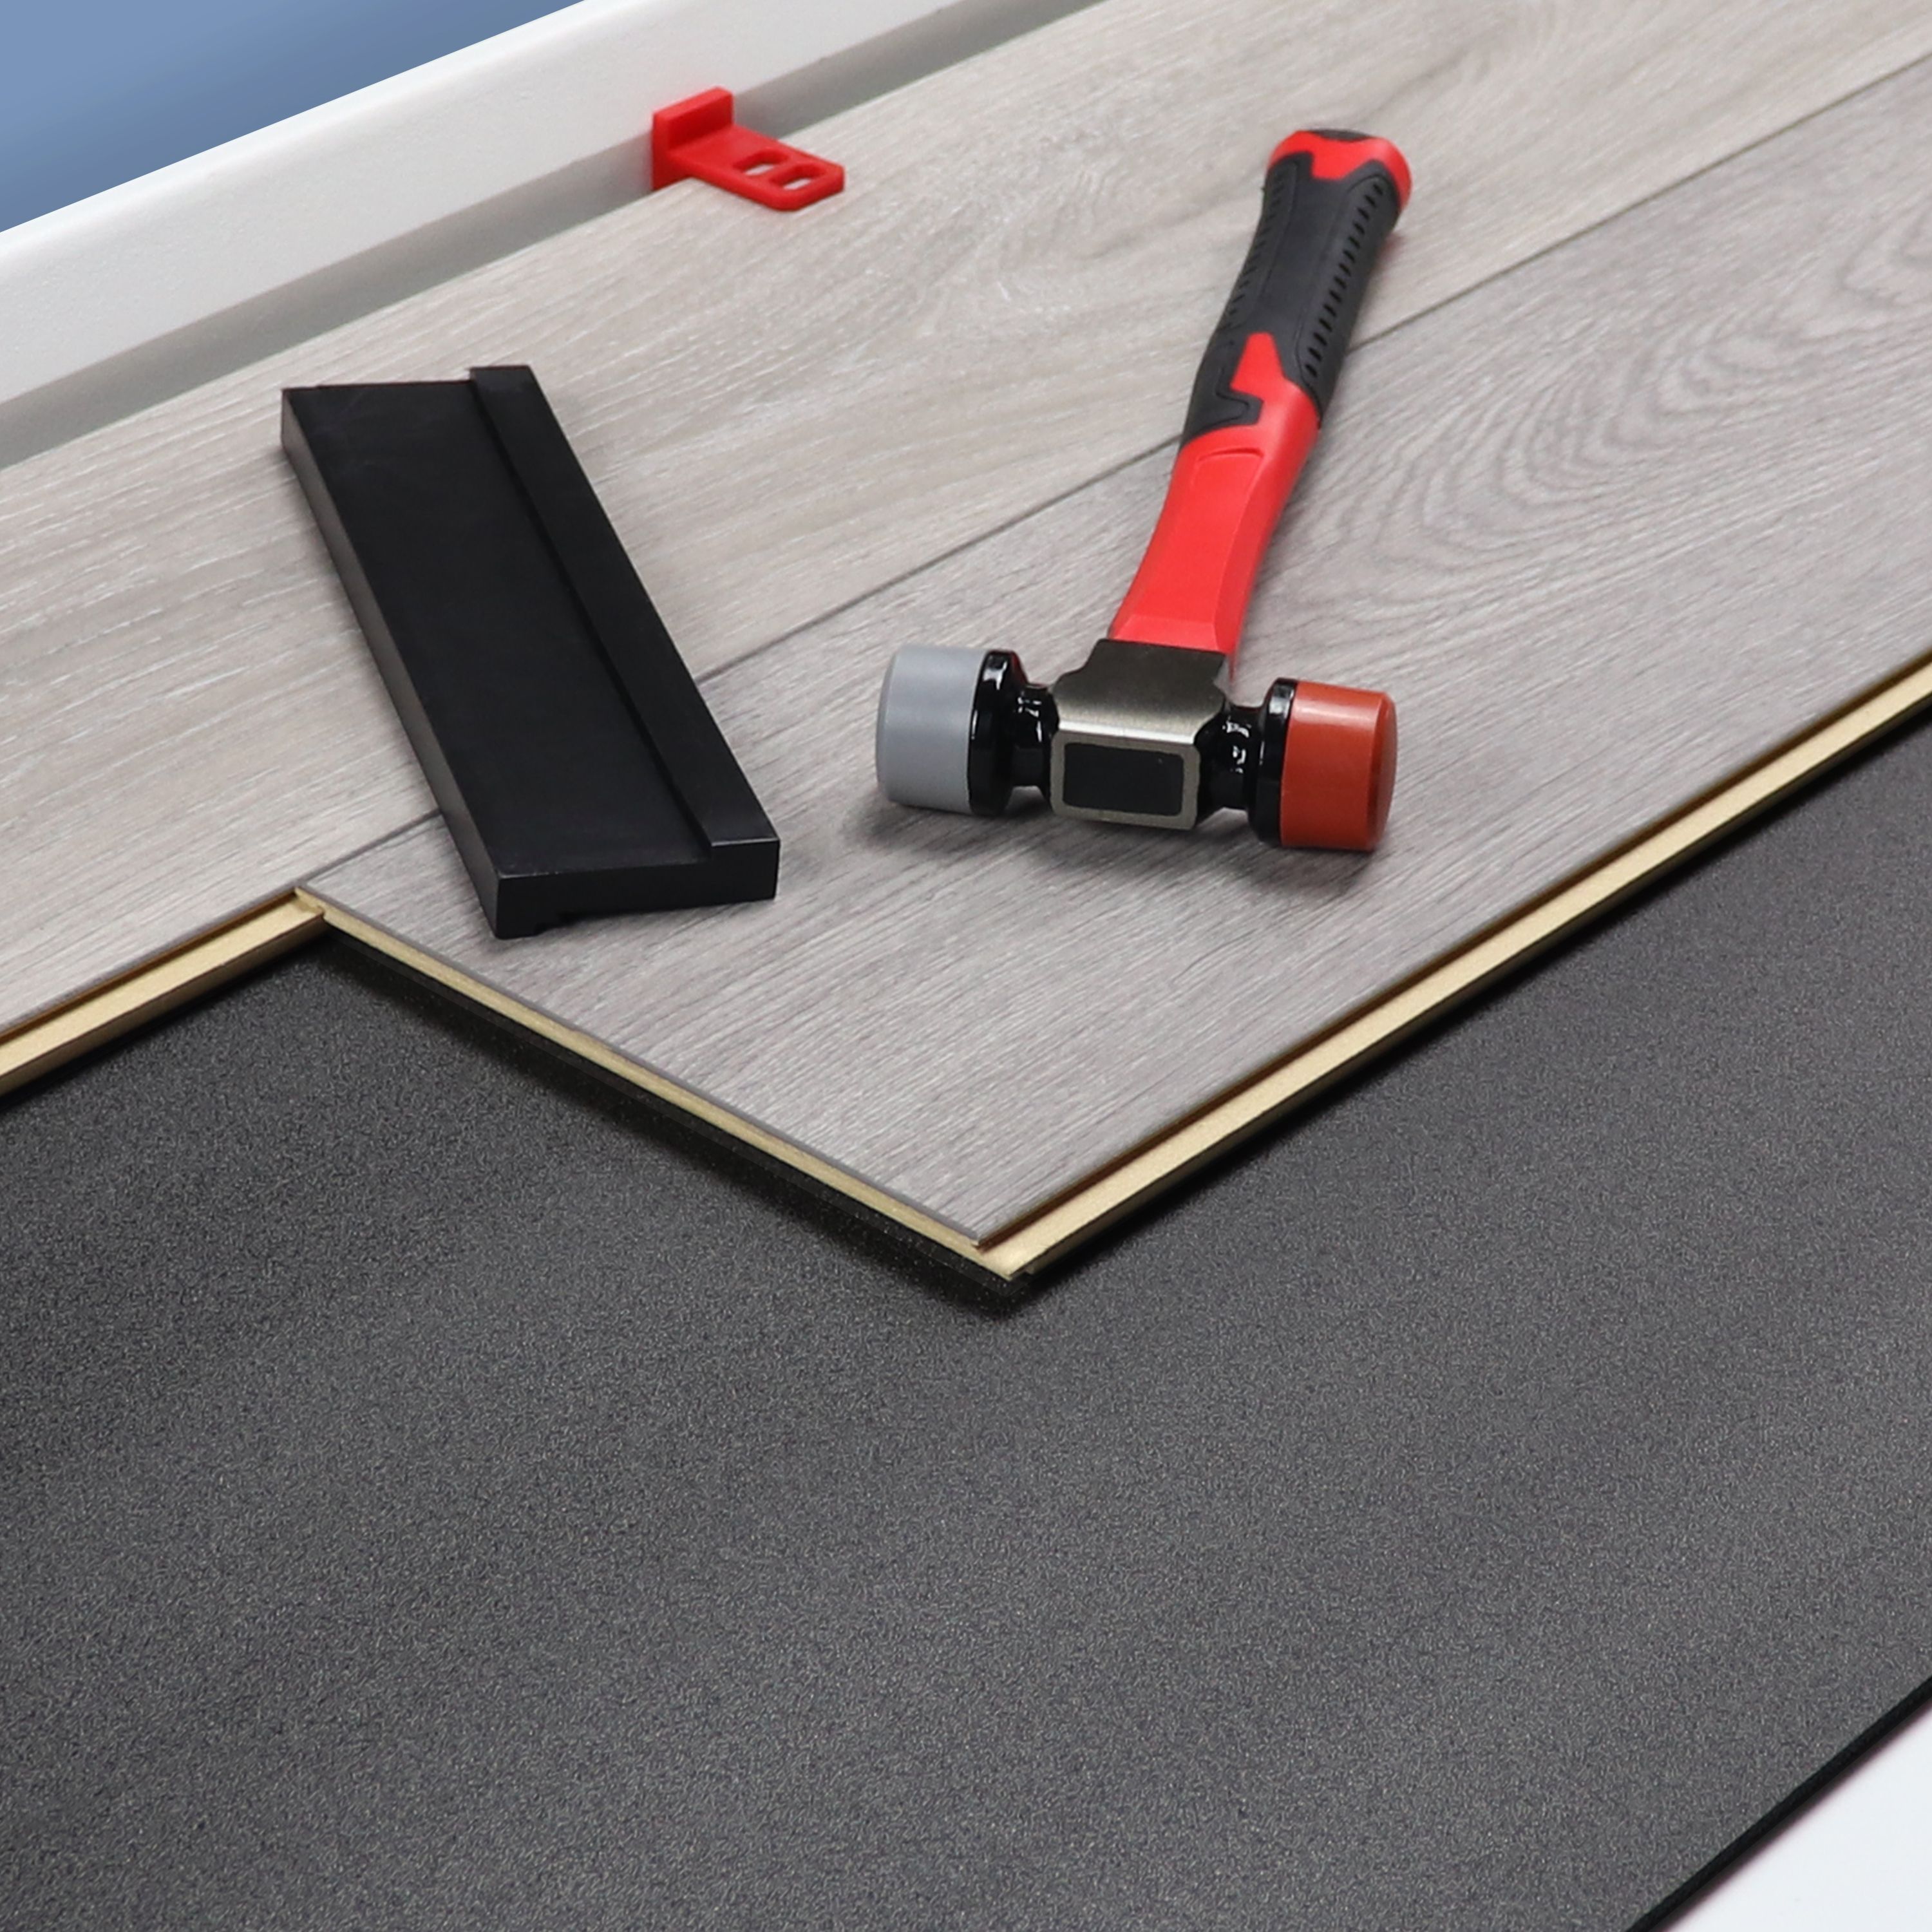 Vitrex Classic 5mm Foam Laminate & solid wood Underlay panels, 9.76m²